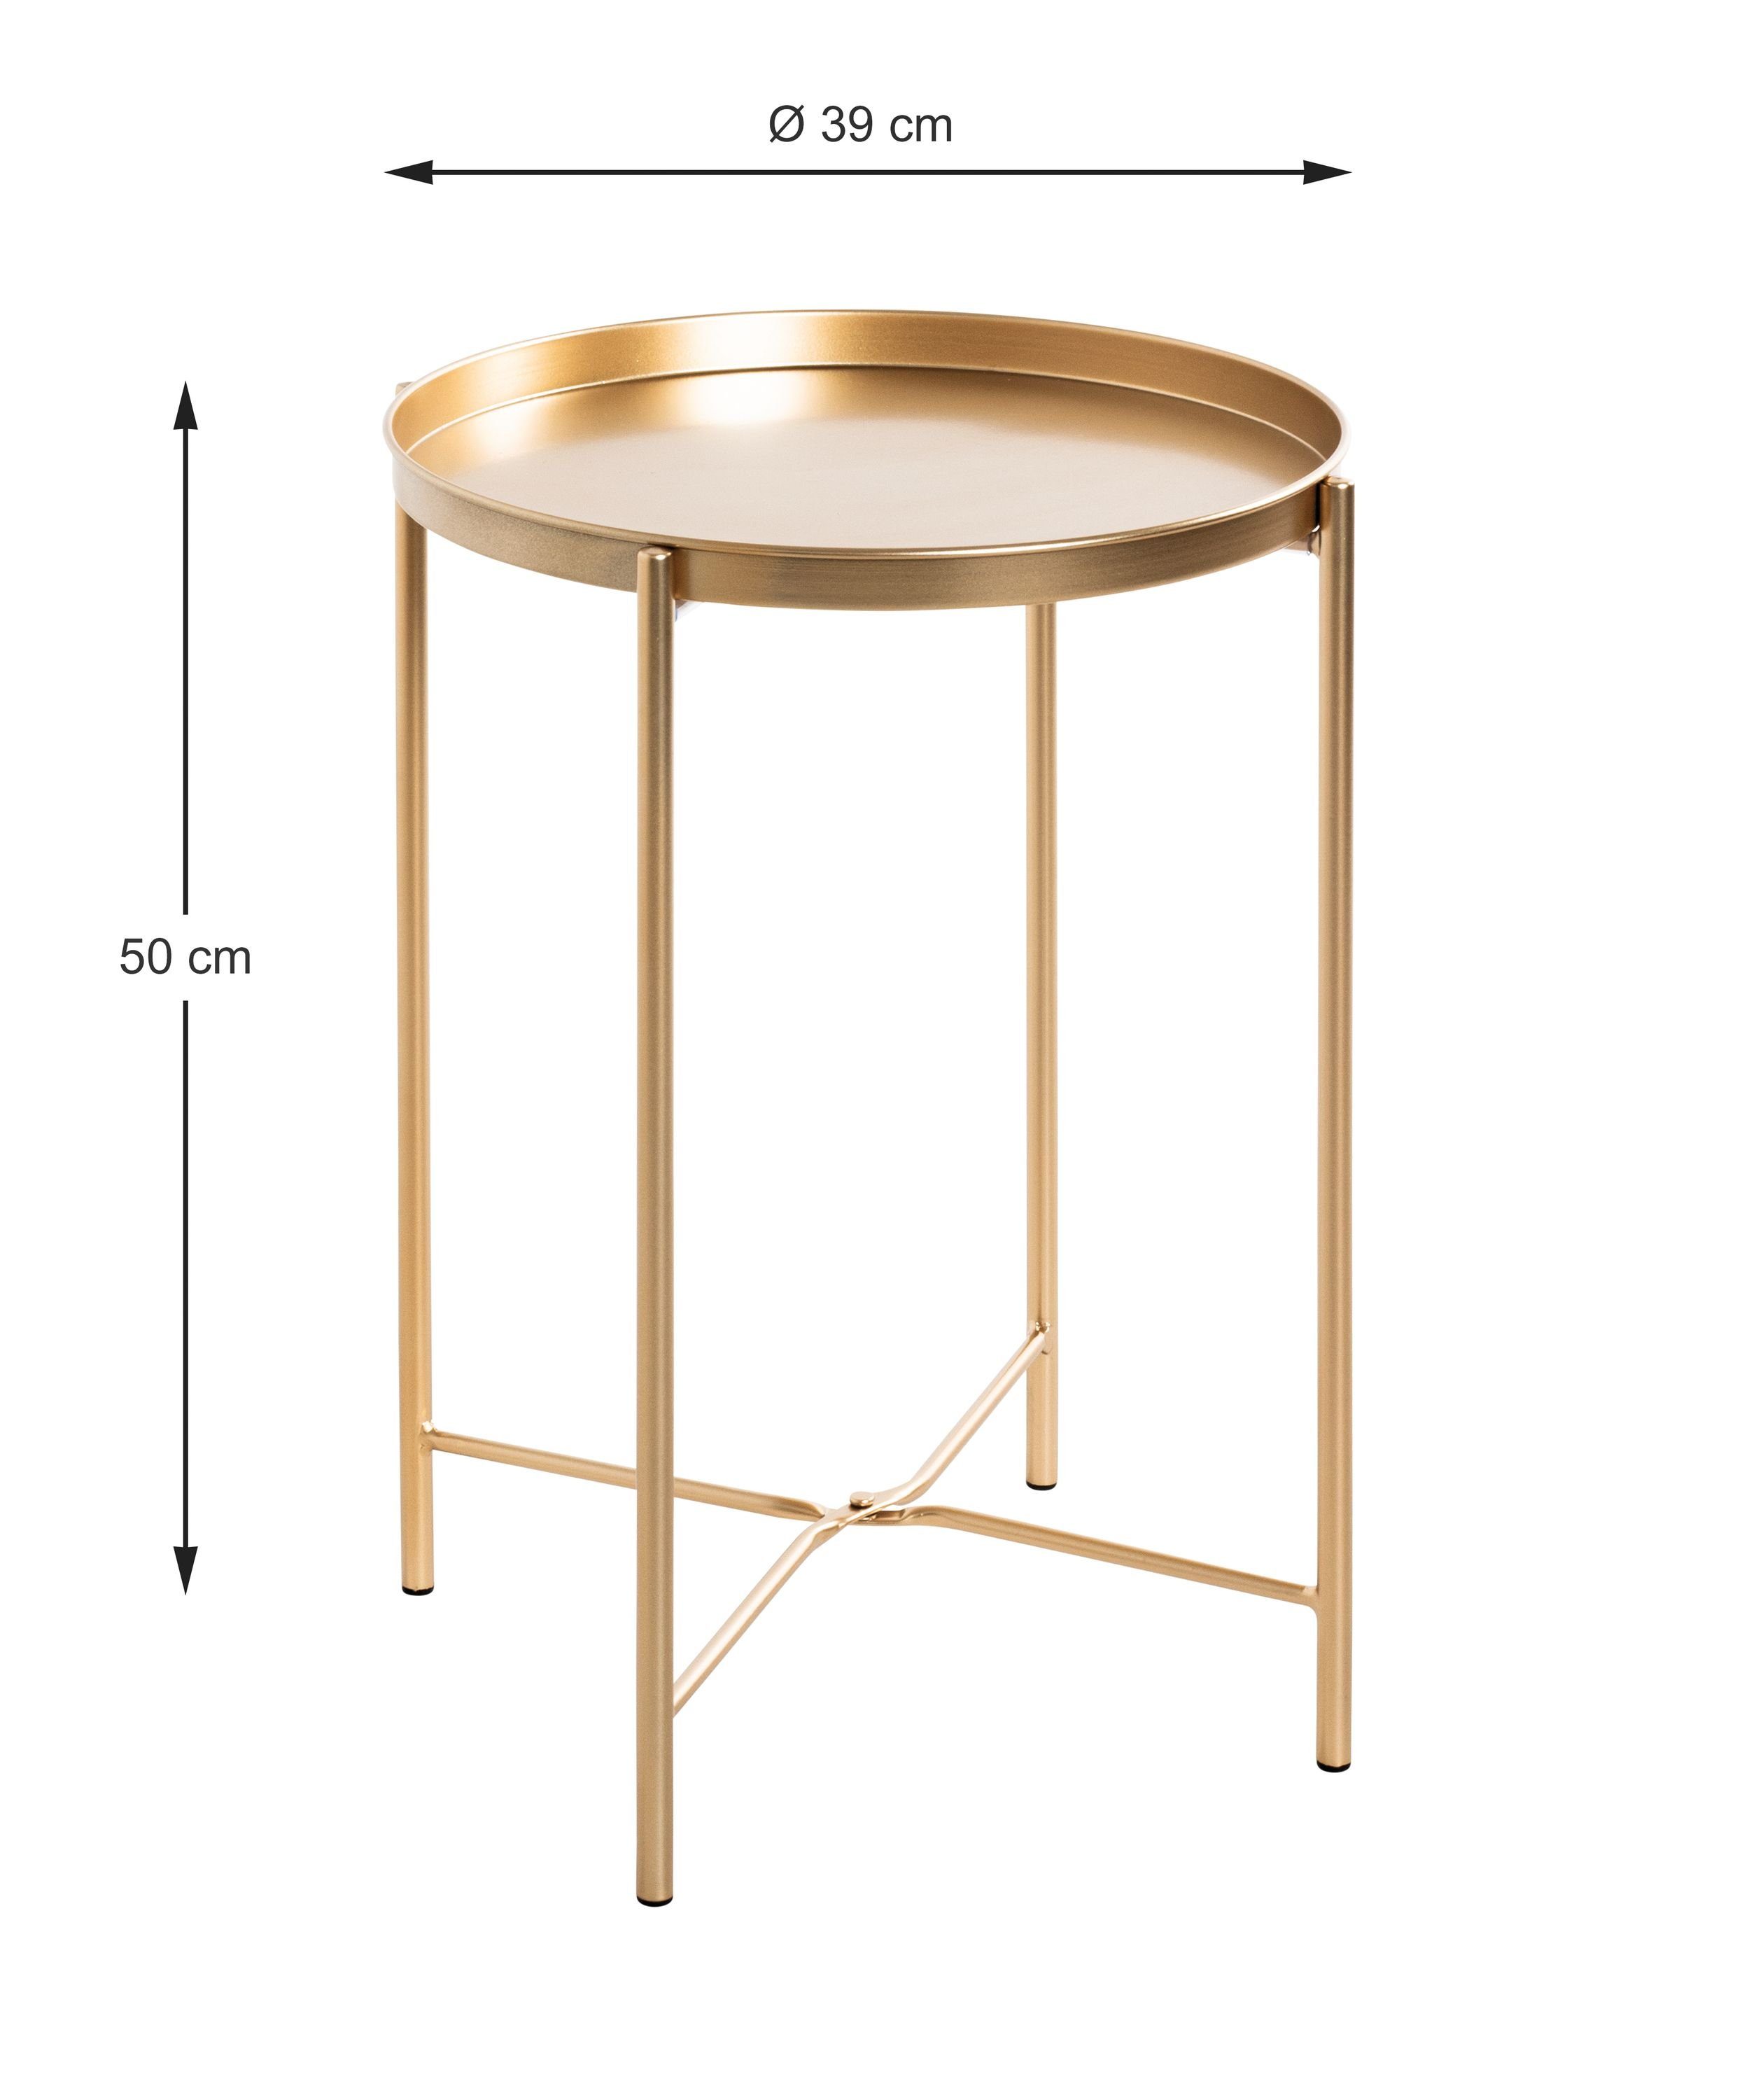 gold Möbel Kaffeetisch DH Beistelltisch, HAKU HAKU Beistelltisch cm) 39x50 Beistelltisch (DH 39x50 cm